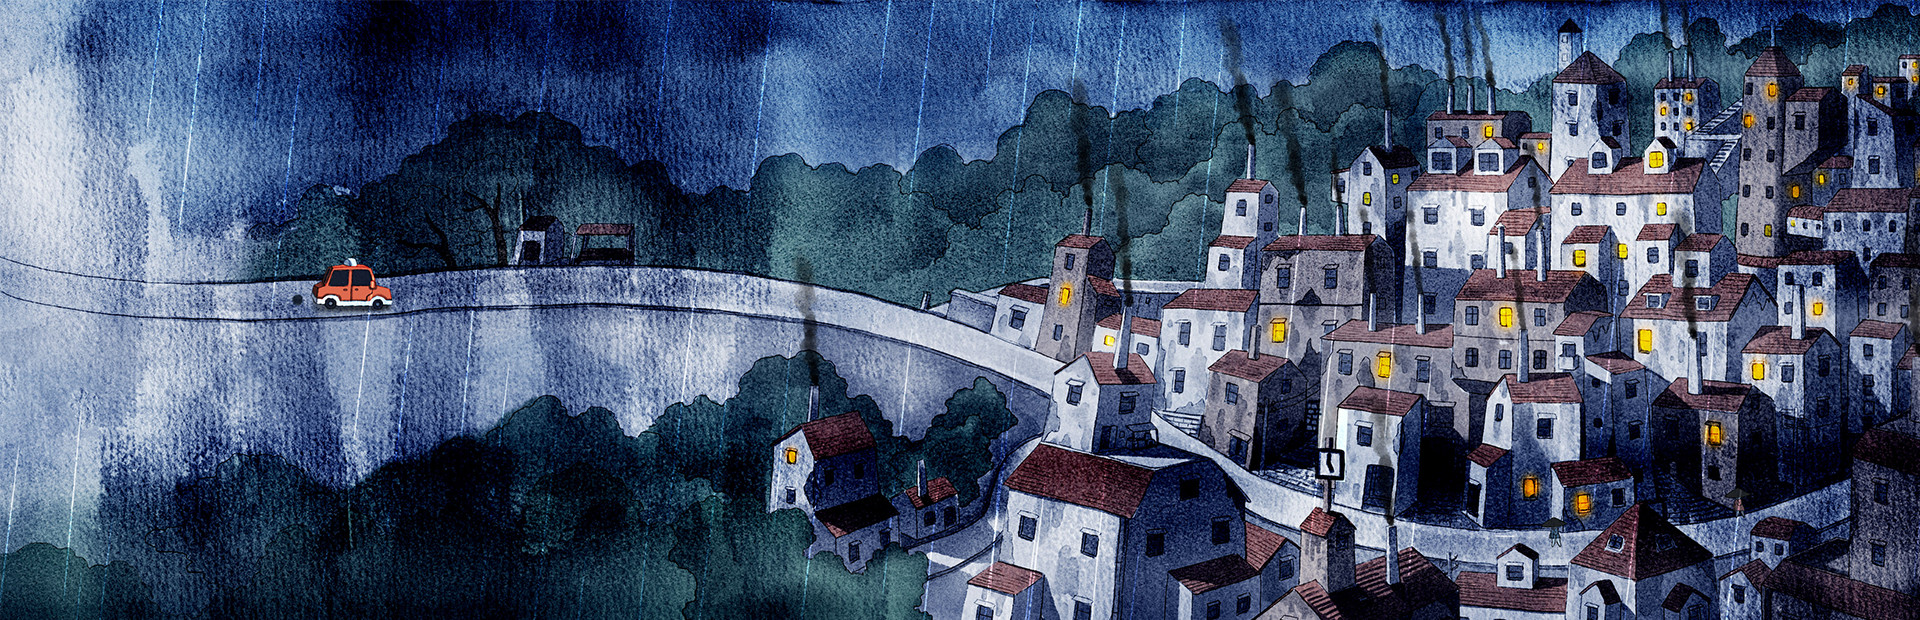 Rain City cover image